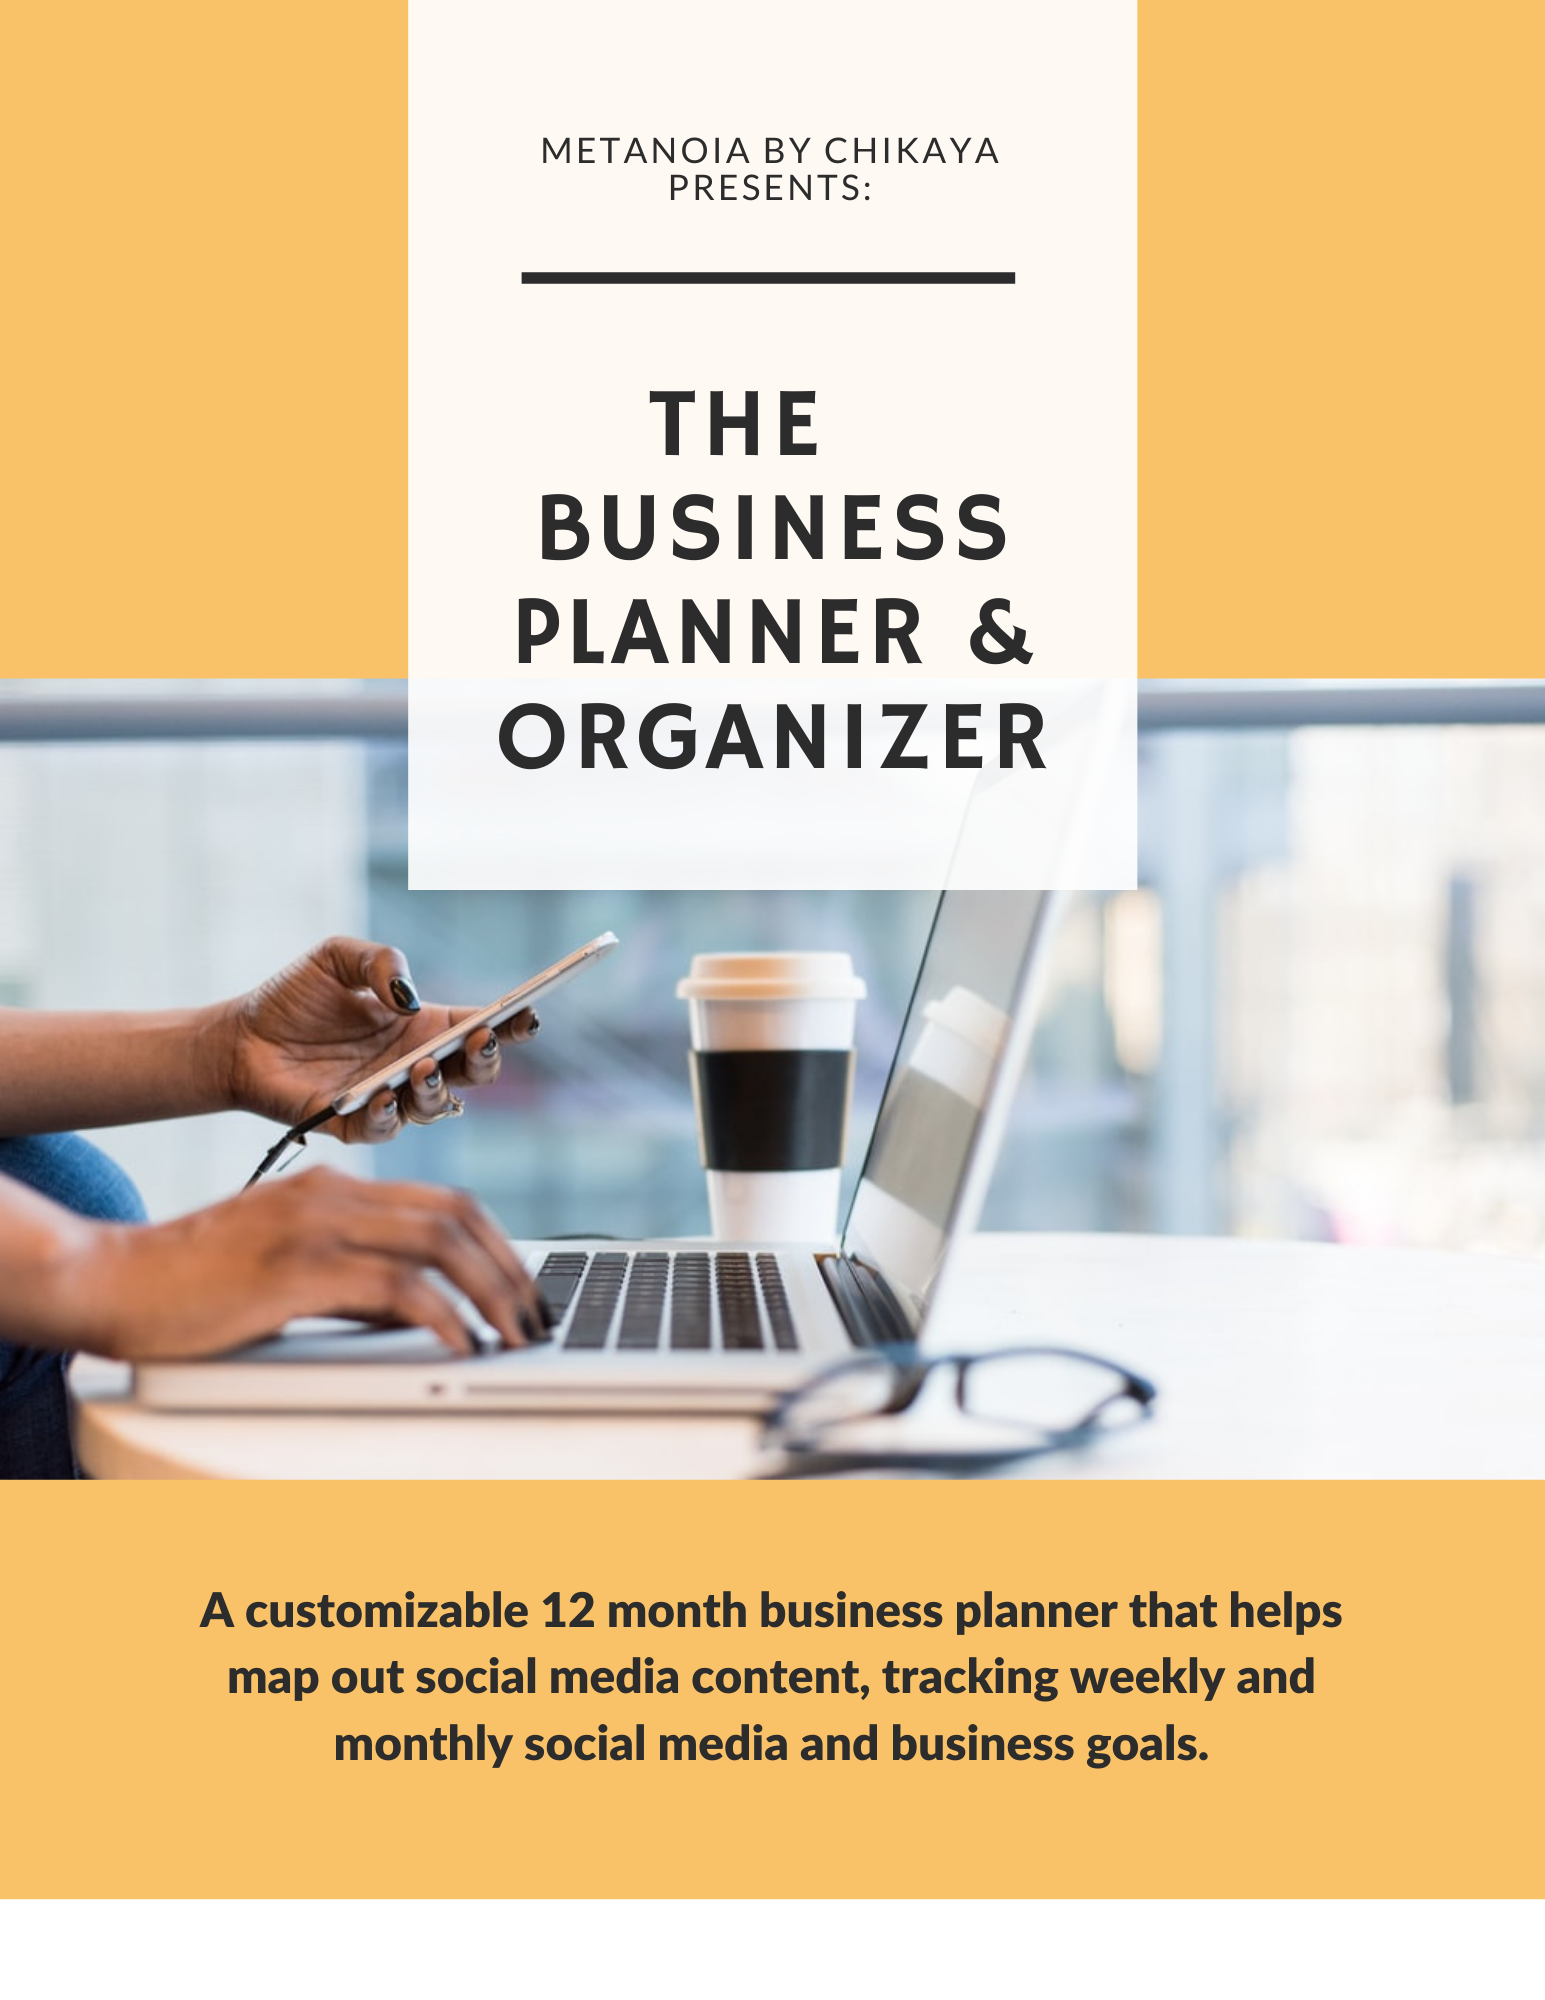 The Business Planner & Organizer